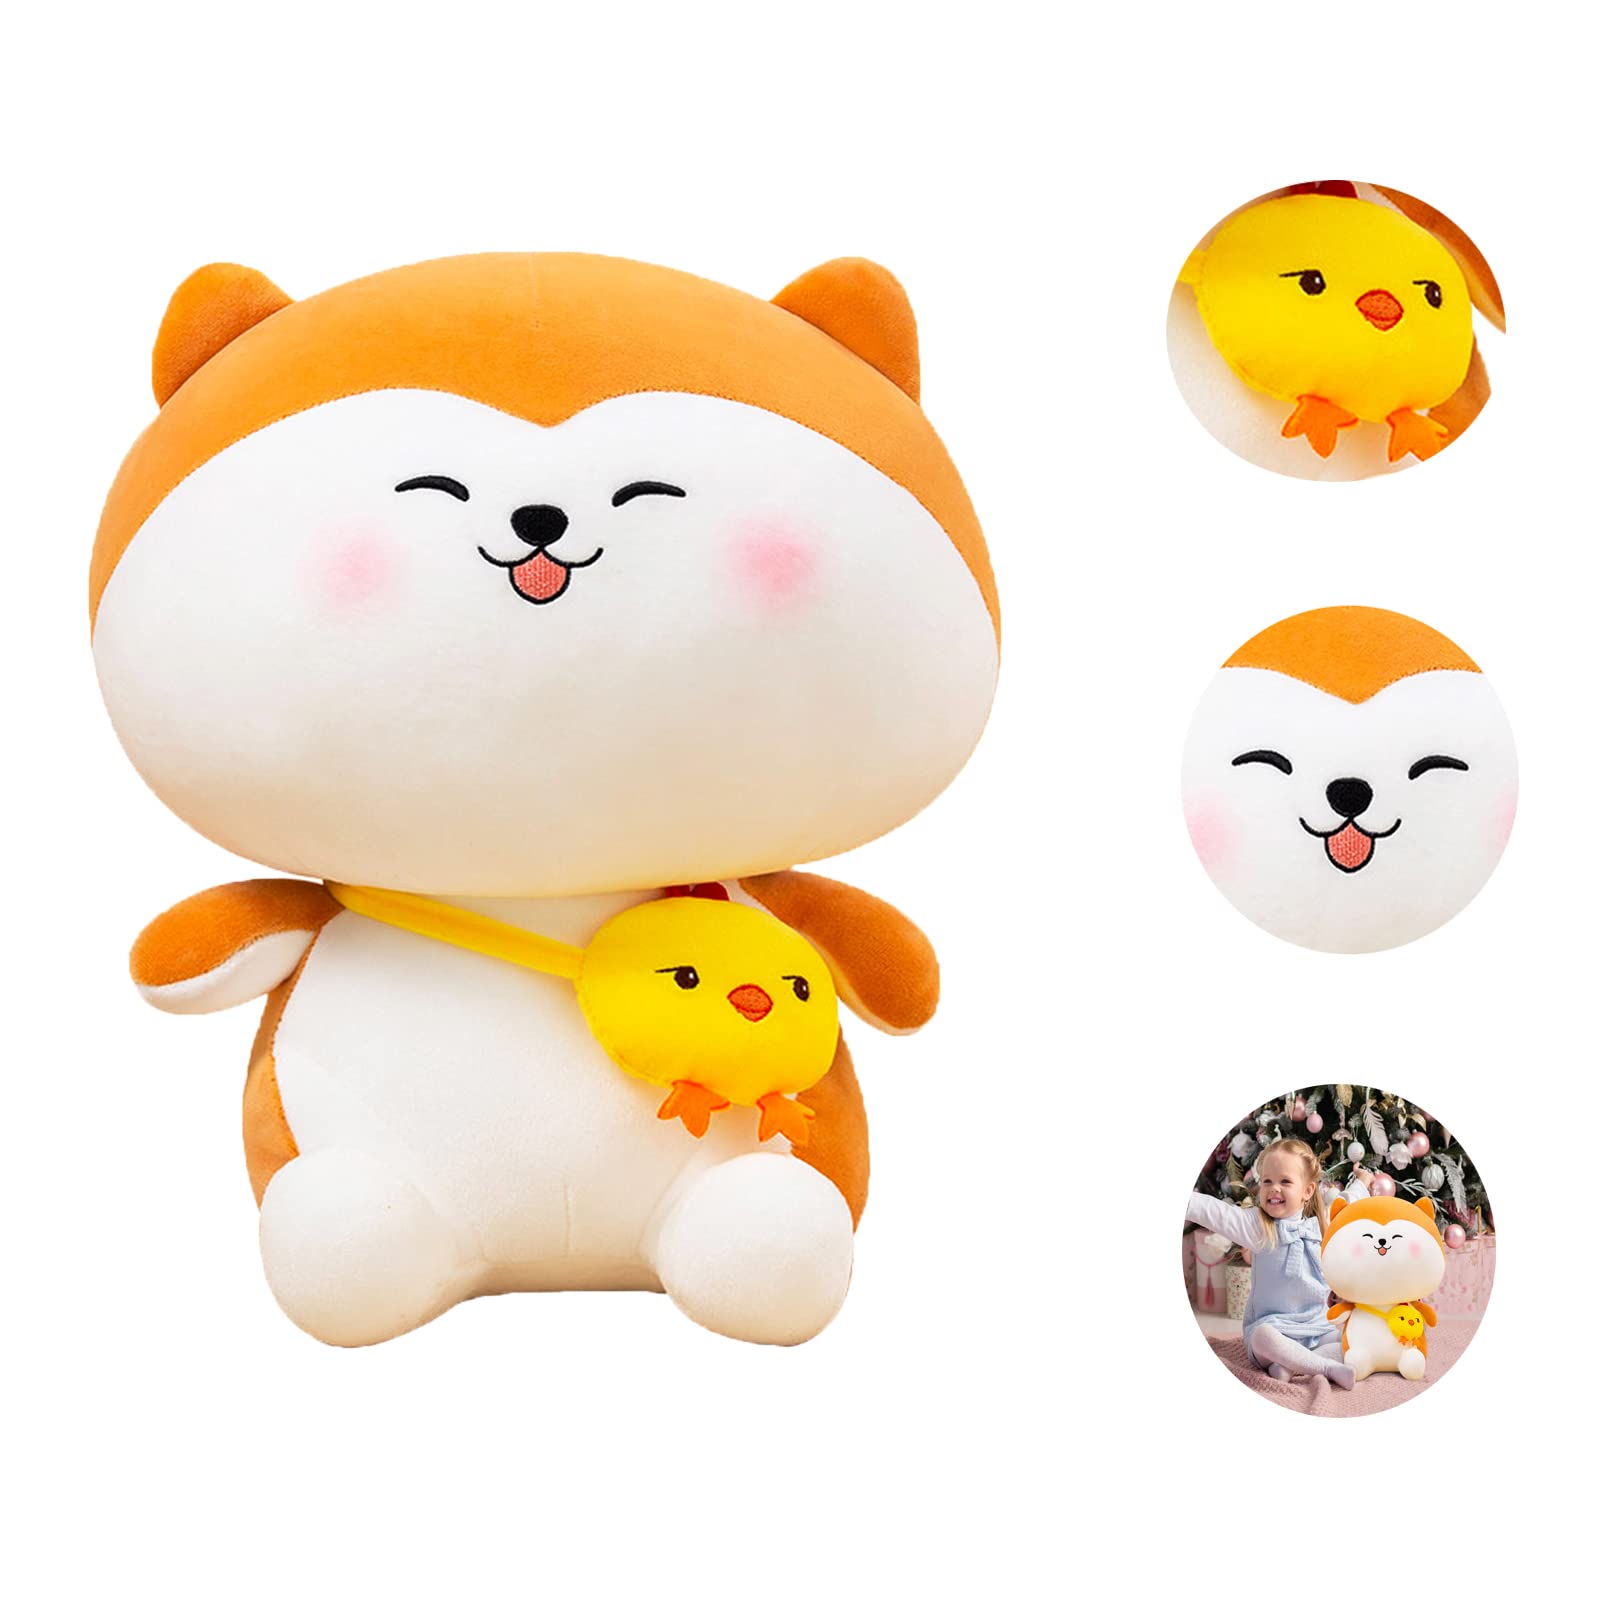 Shiba inu Plüschtier,Plüschtier Hund,Anime Kawaii Kinder Kuscheltier,Cute Shiba inu Plush,PP-Baumwolle,35cm